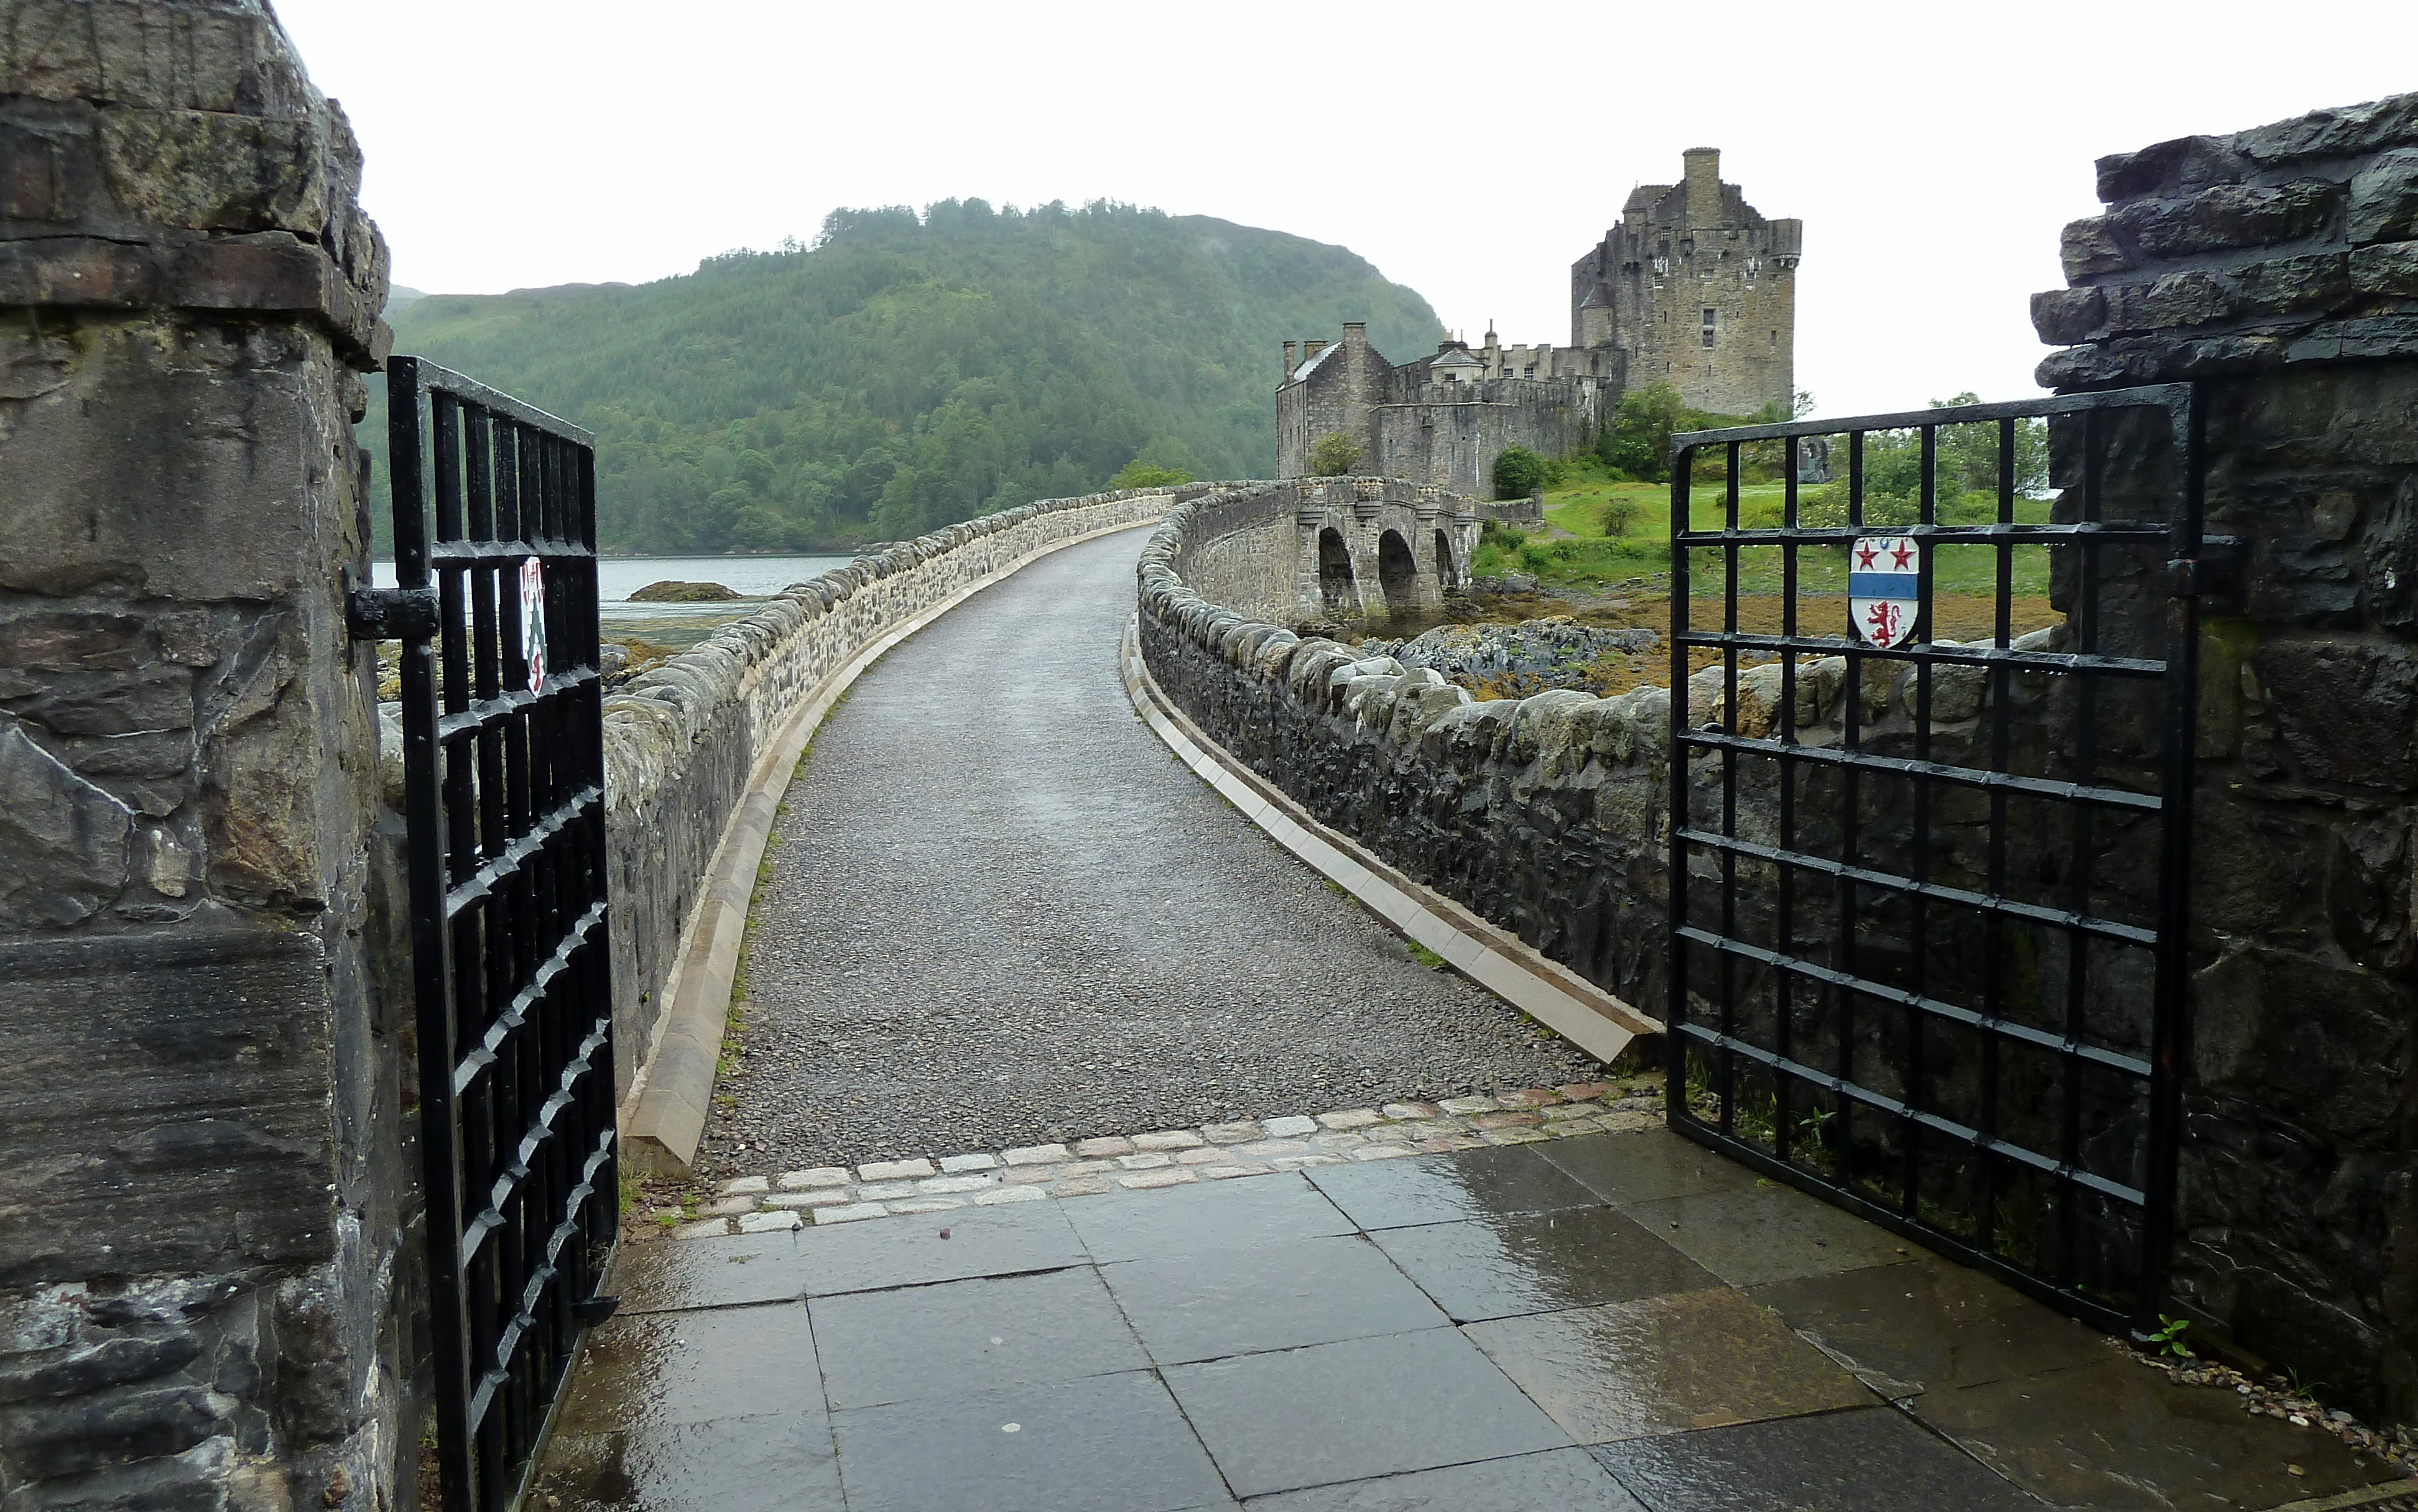 Looking down the bridge towards the Castle. (2011)